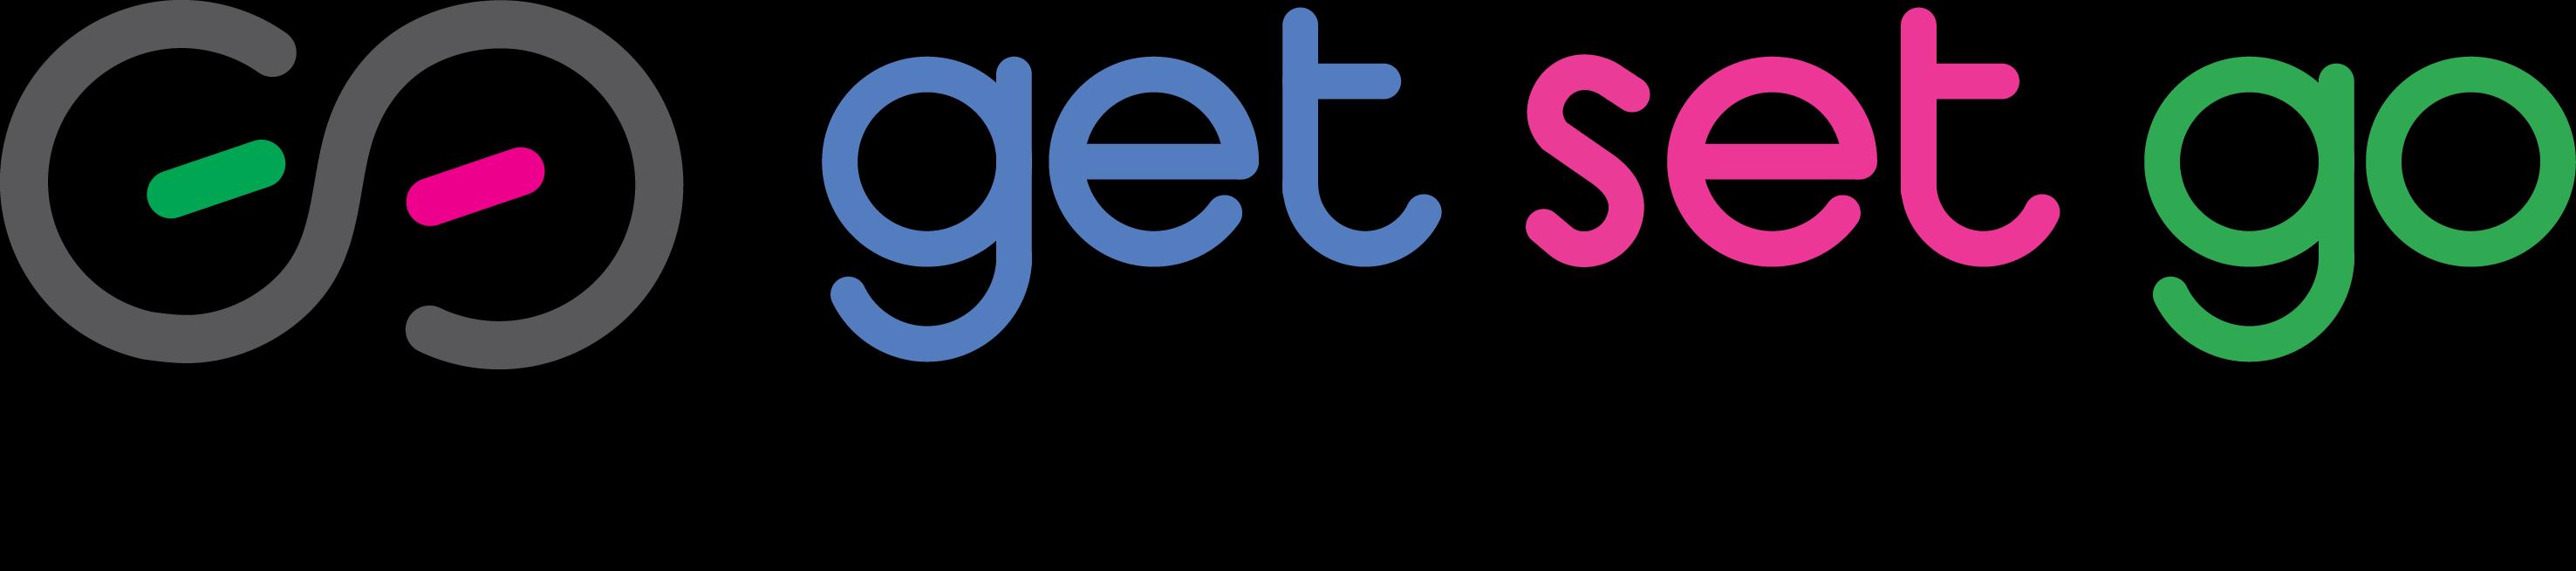 GetSetGo Fitness_logo